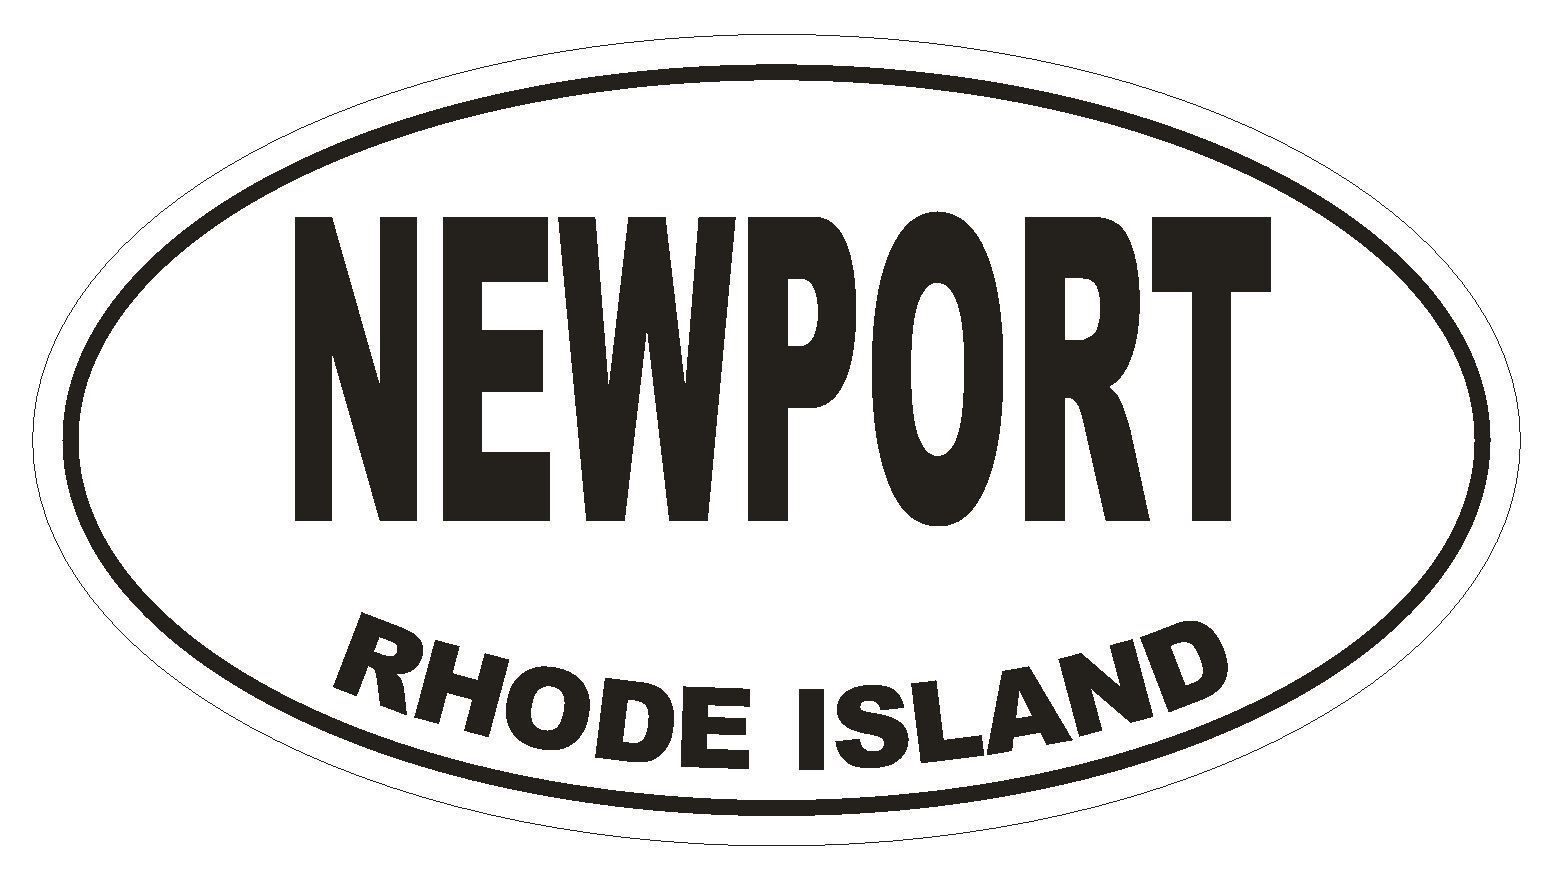 Newport Rhode Island Oval Bumper Sticker or Helmet Sticker D1498 Euro Oval - $1.39 - $75.00